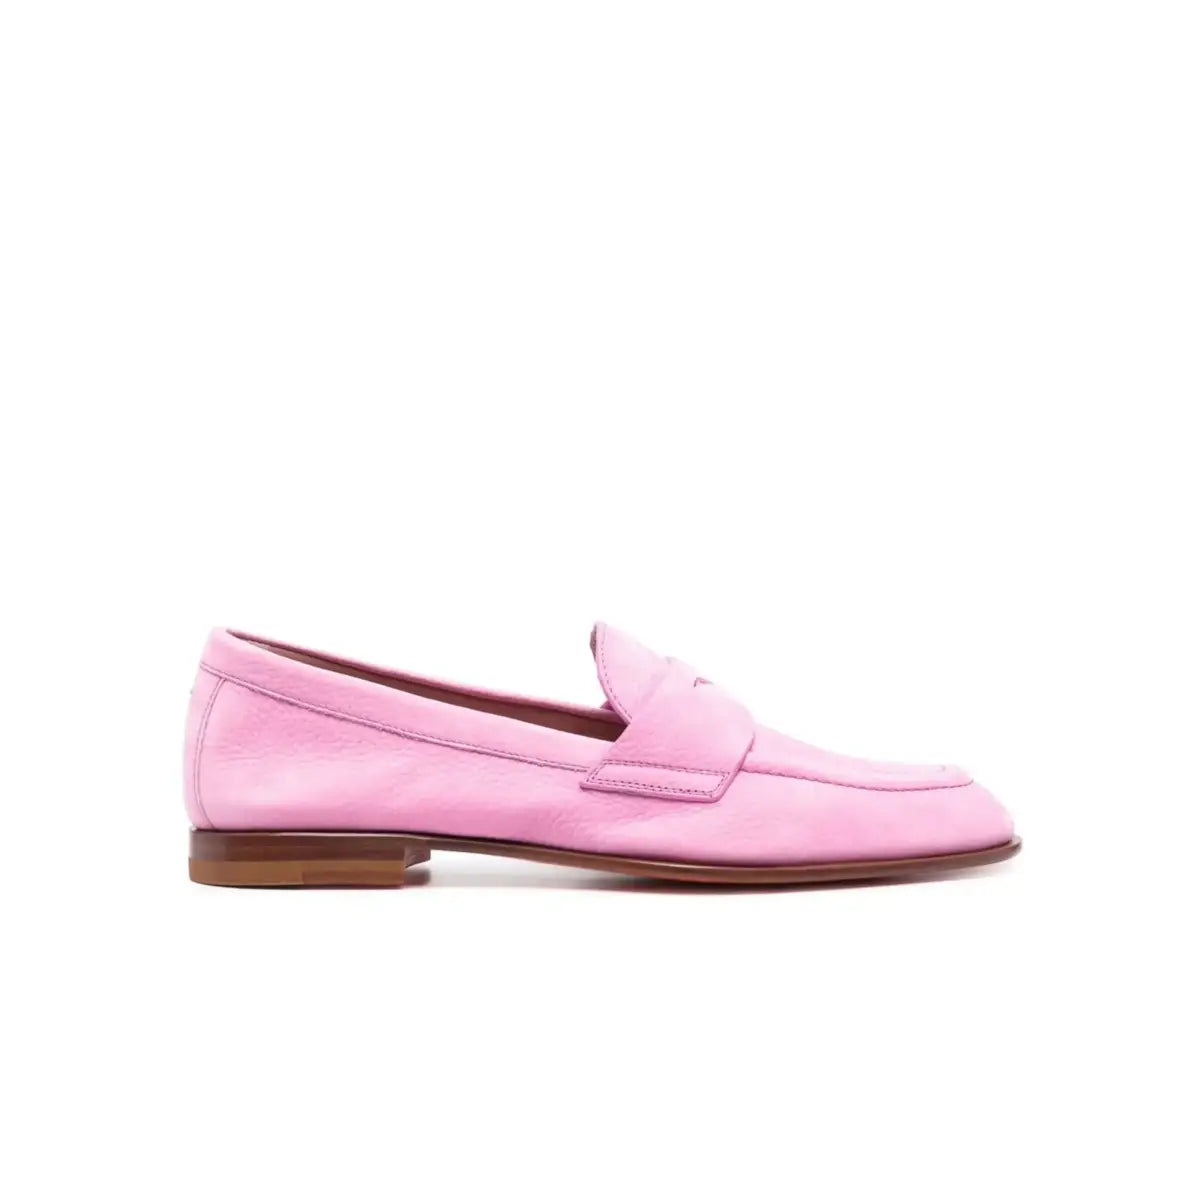 Santoni woman pink loafer